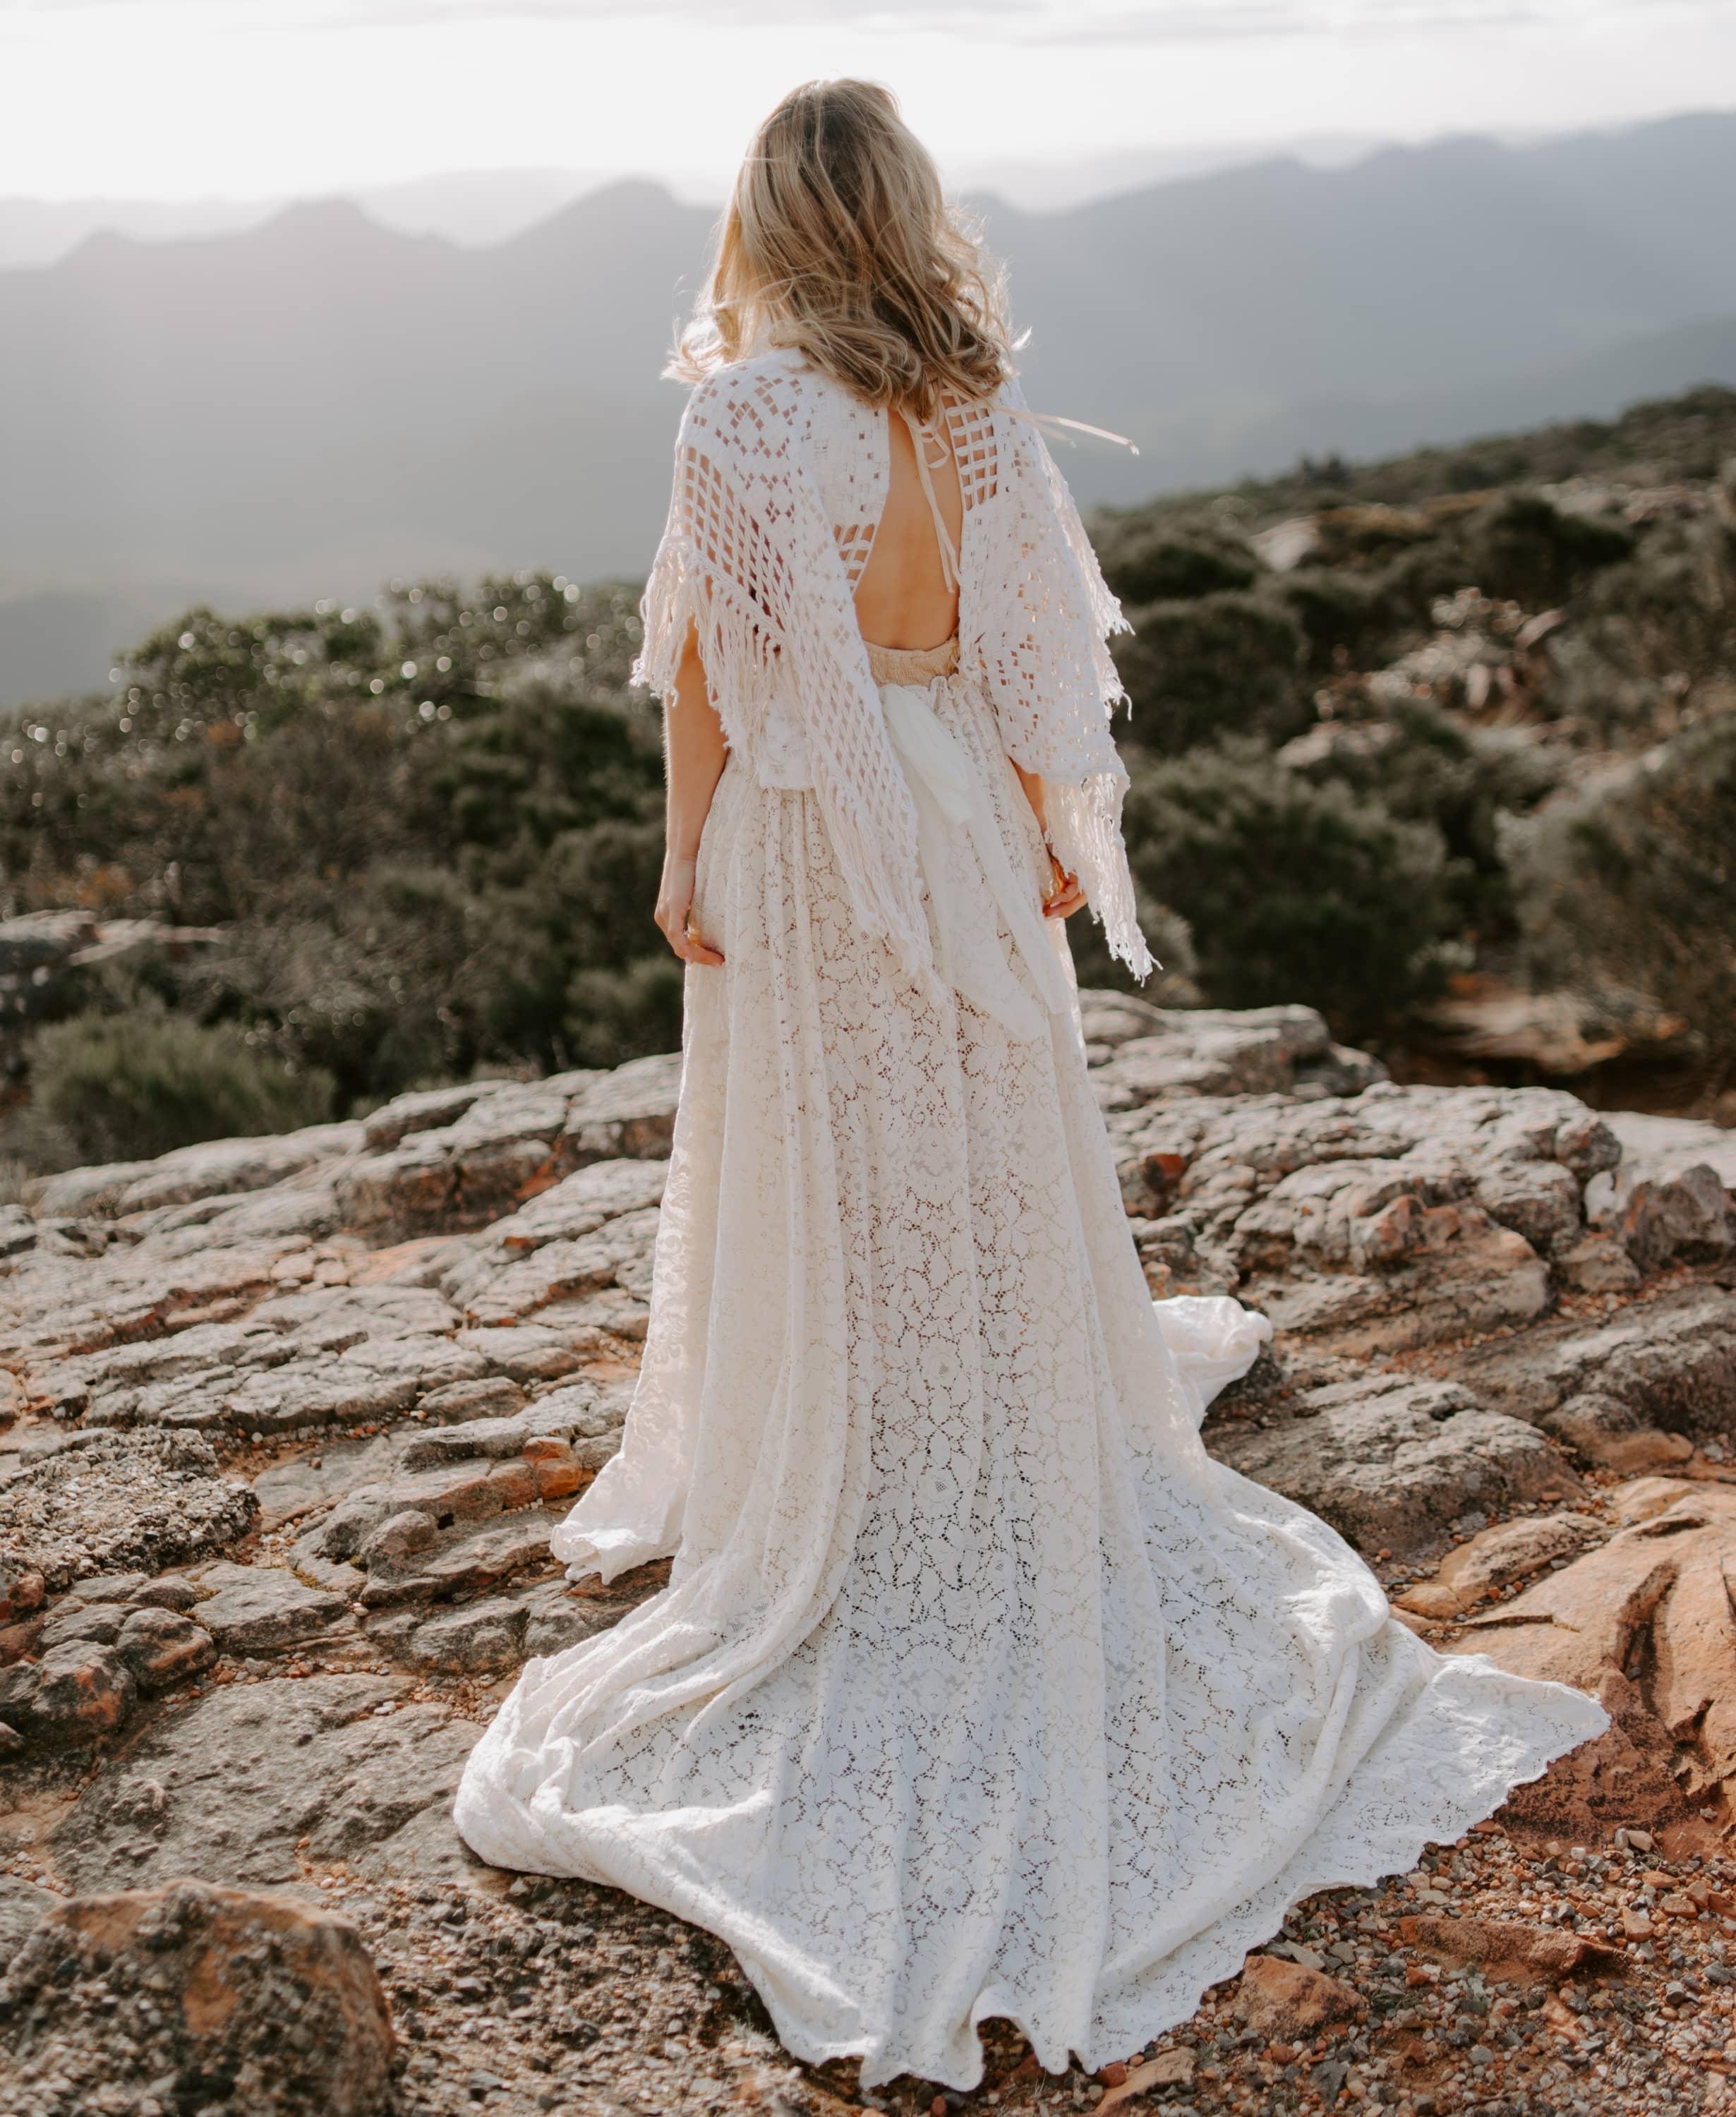 Göreme: Cappadocia Satin Flying Dress Rental | GetYourGuide